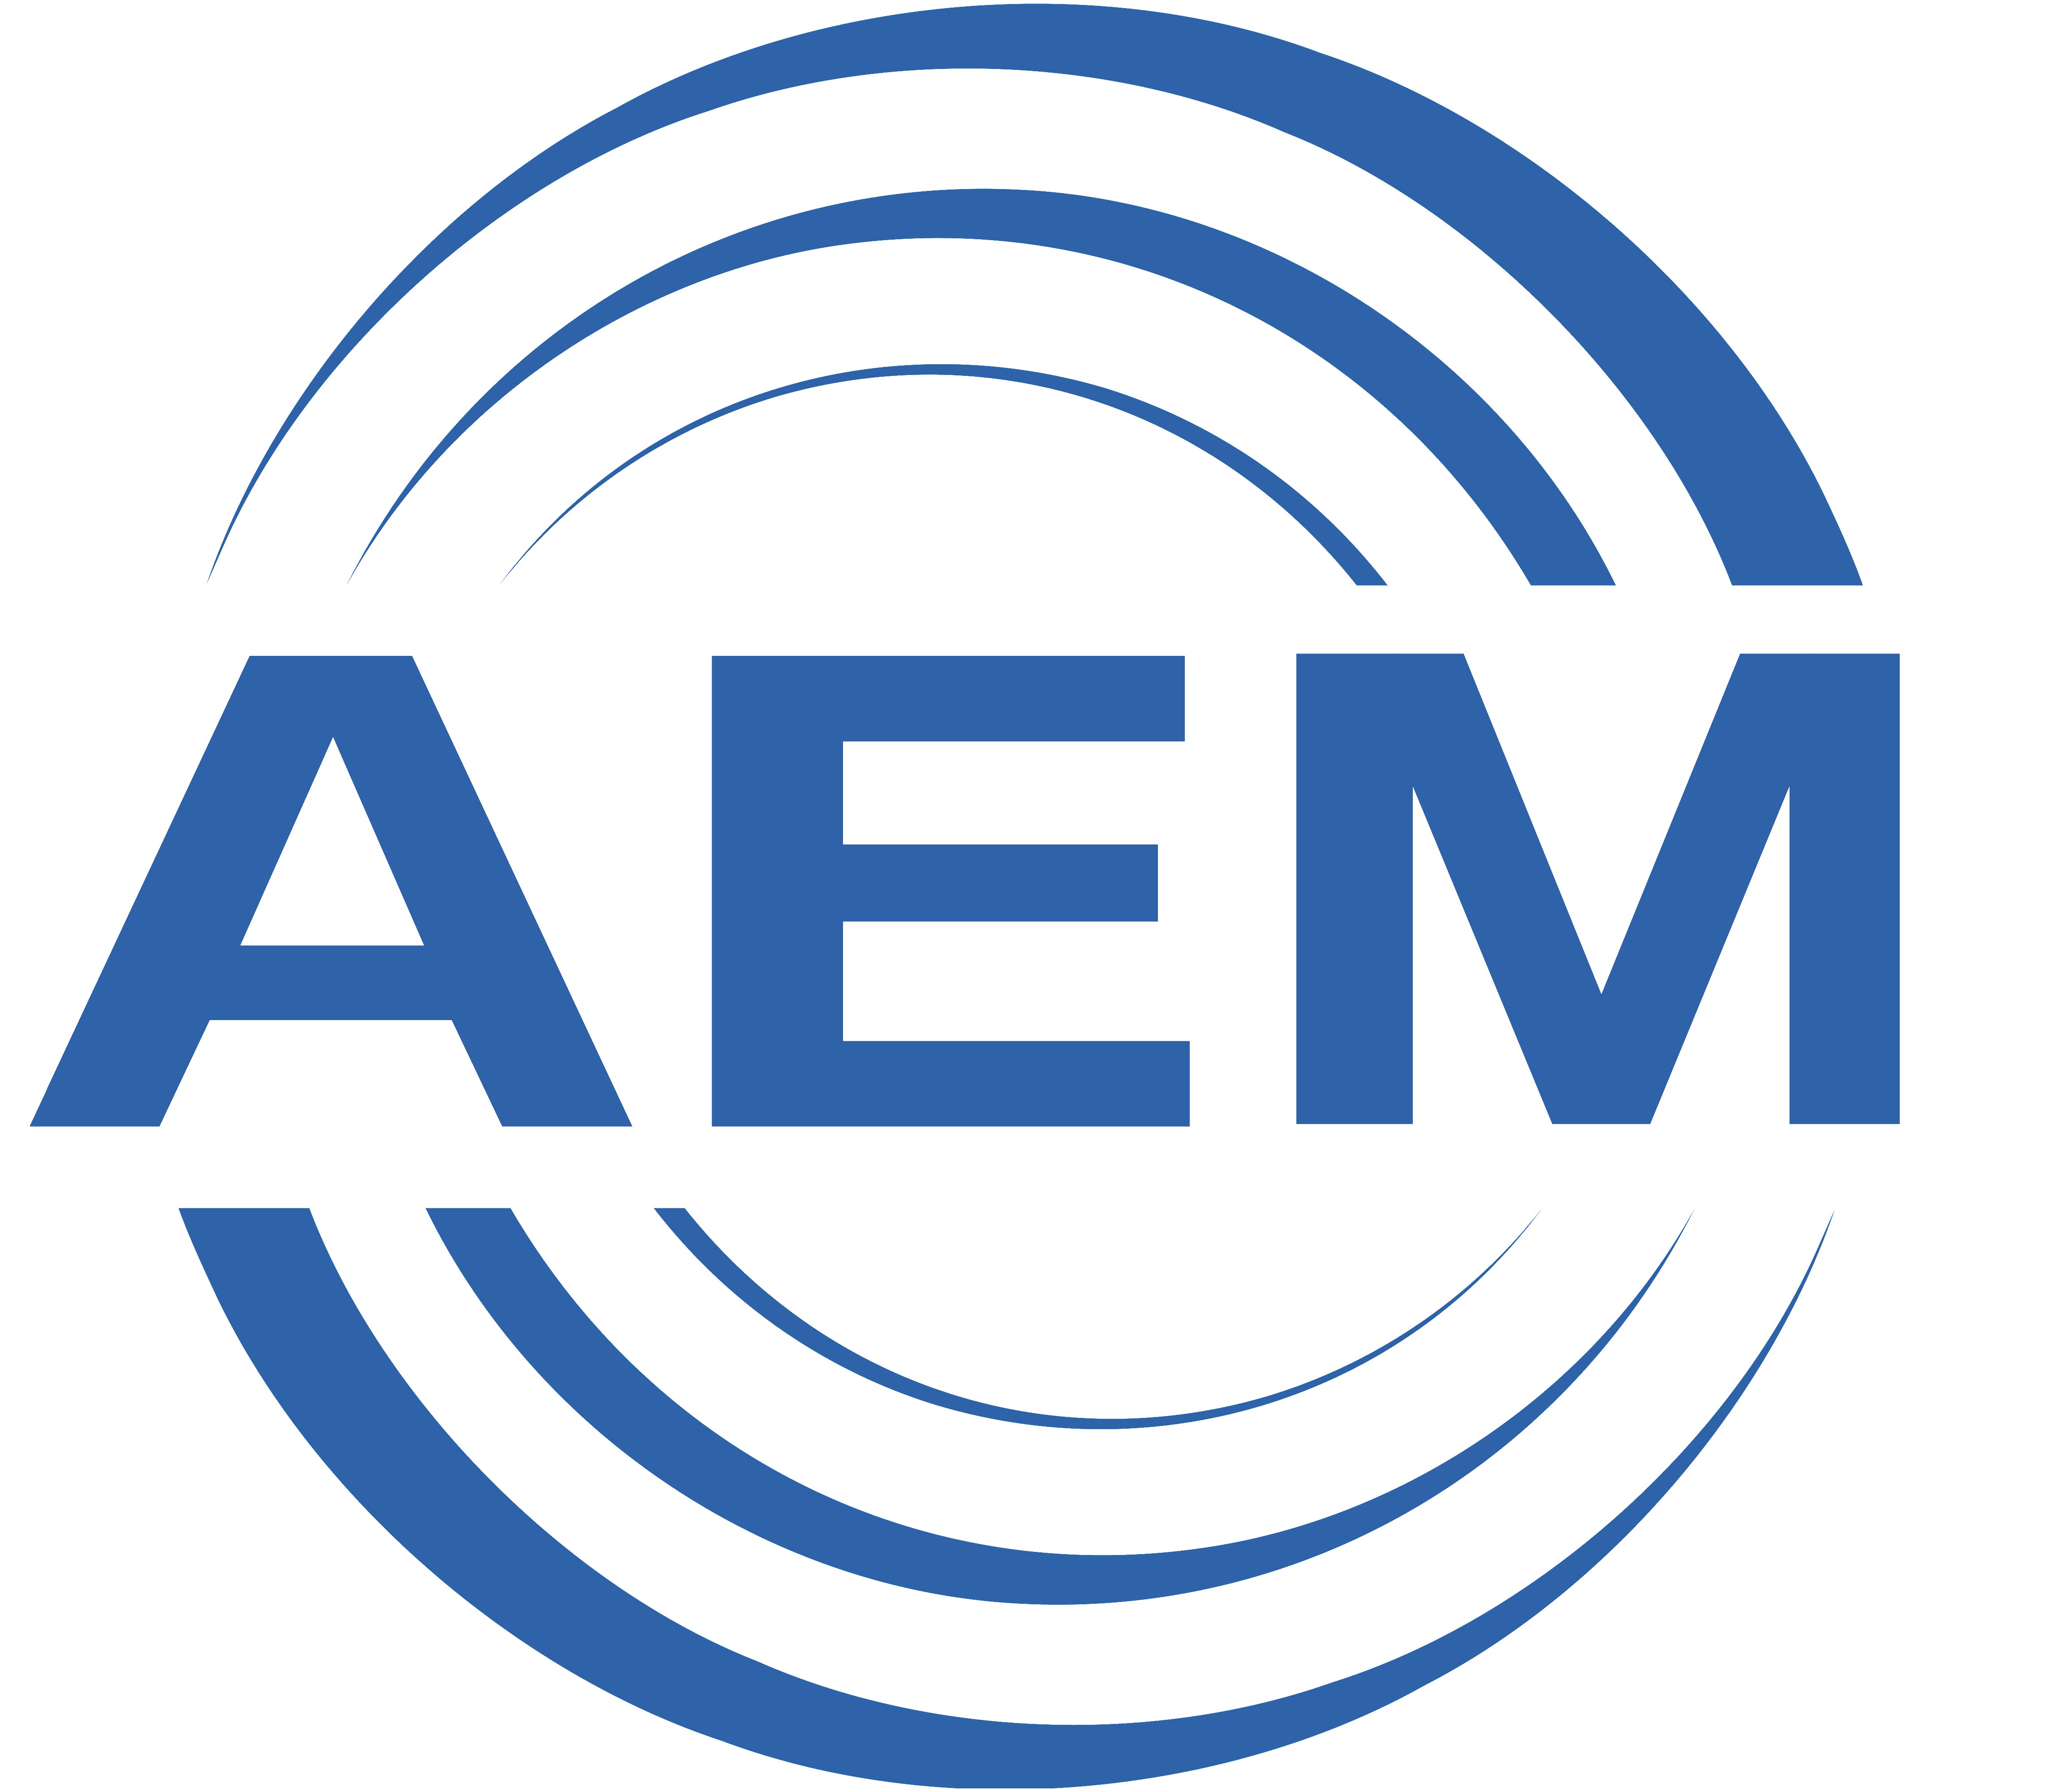 AEM Logo - File:AEM-Logo.png - Wikimedia Commons